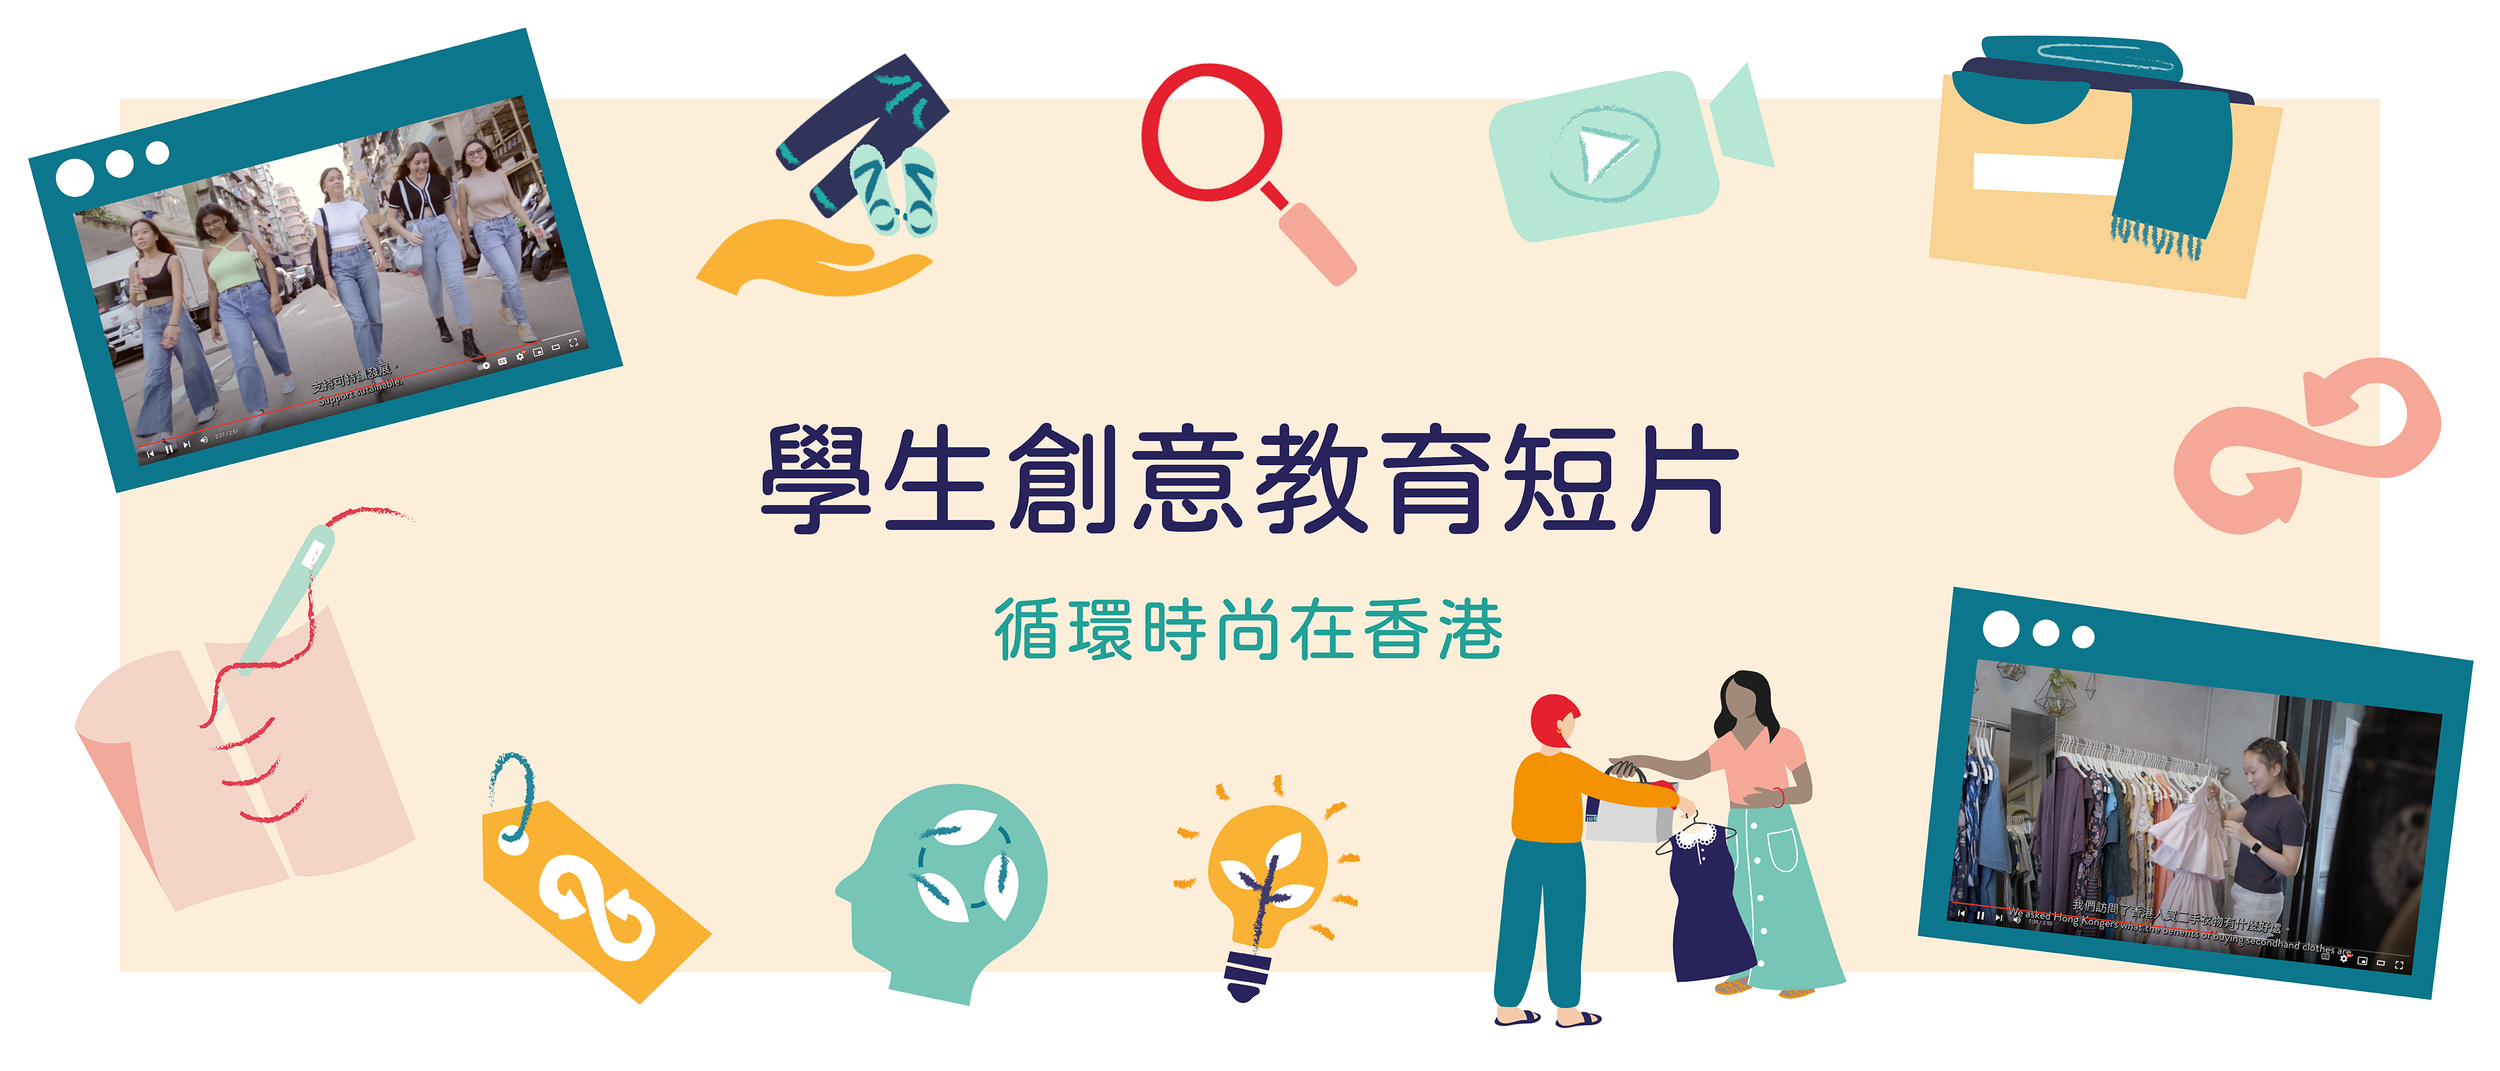 CN_Student video homepage header banner2_revised.png